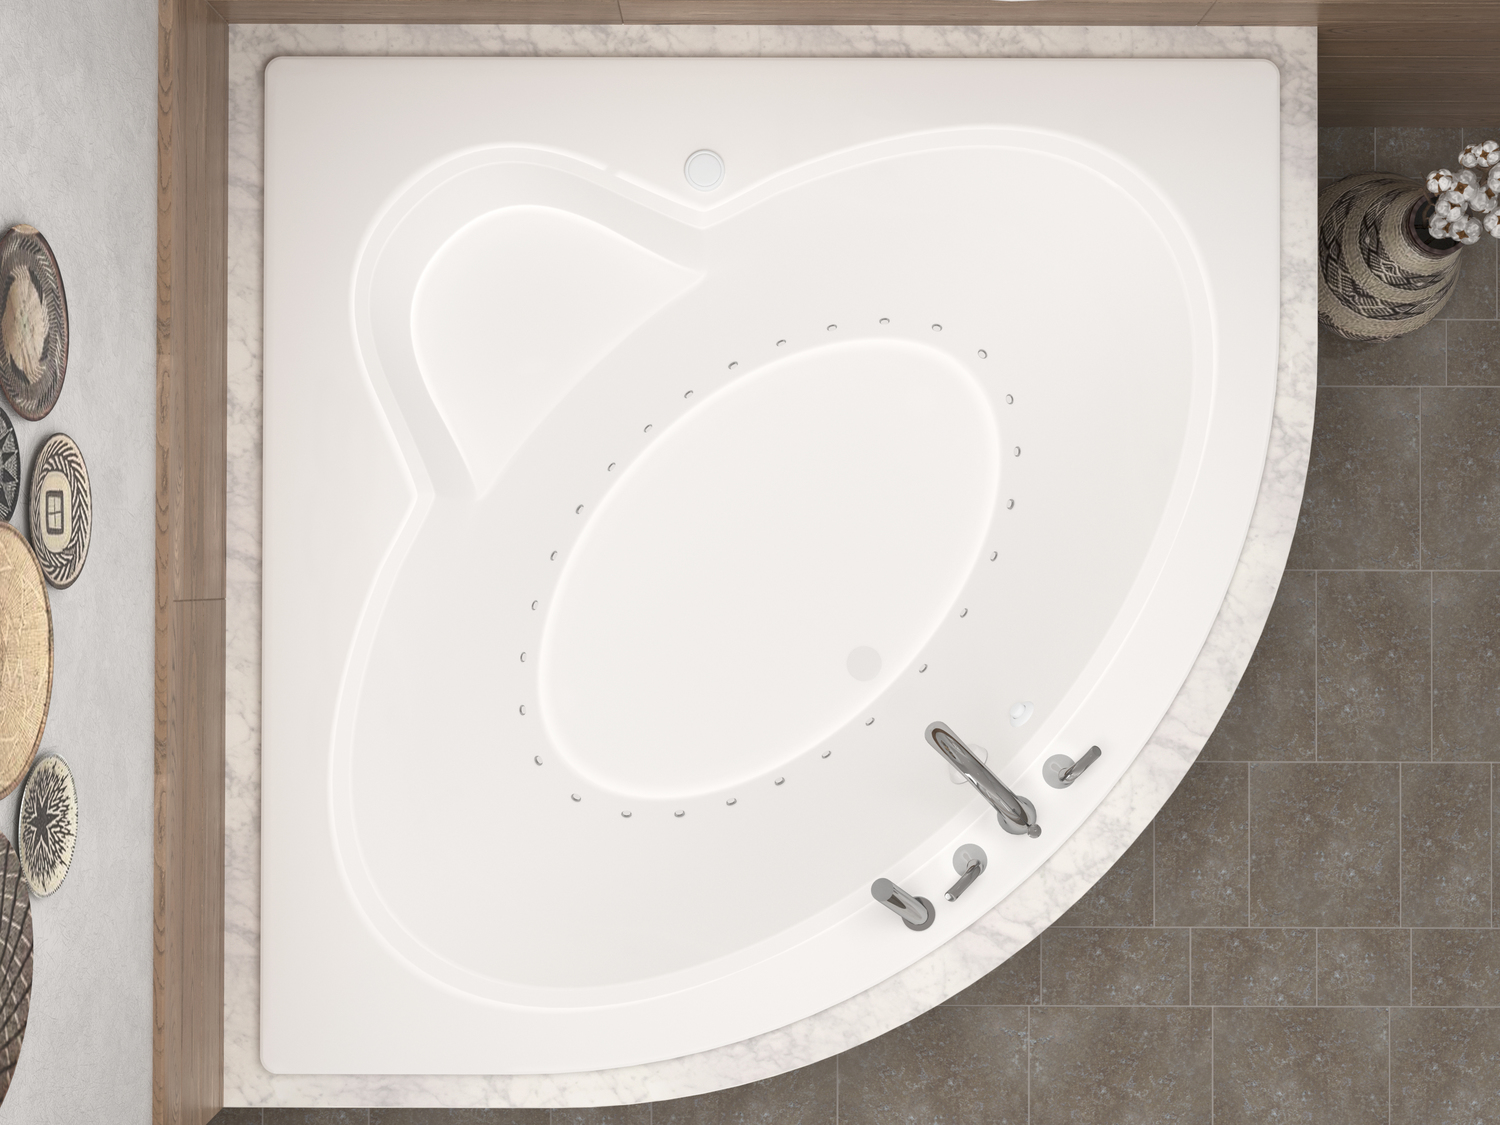  Atlantis BATHROOM - Bathtubs - Drop-in Bathtub - Corner - Air White